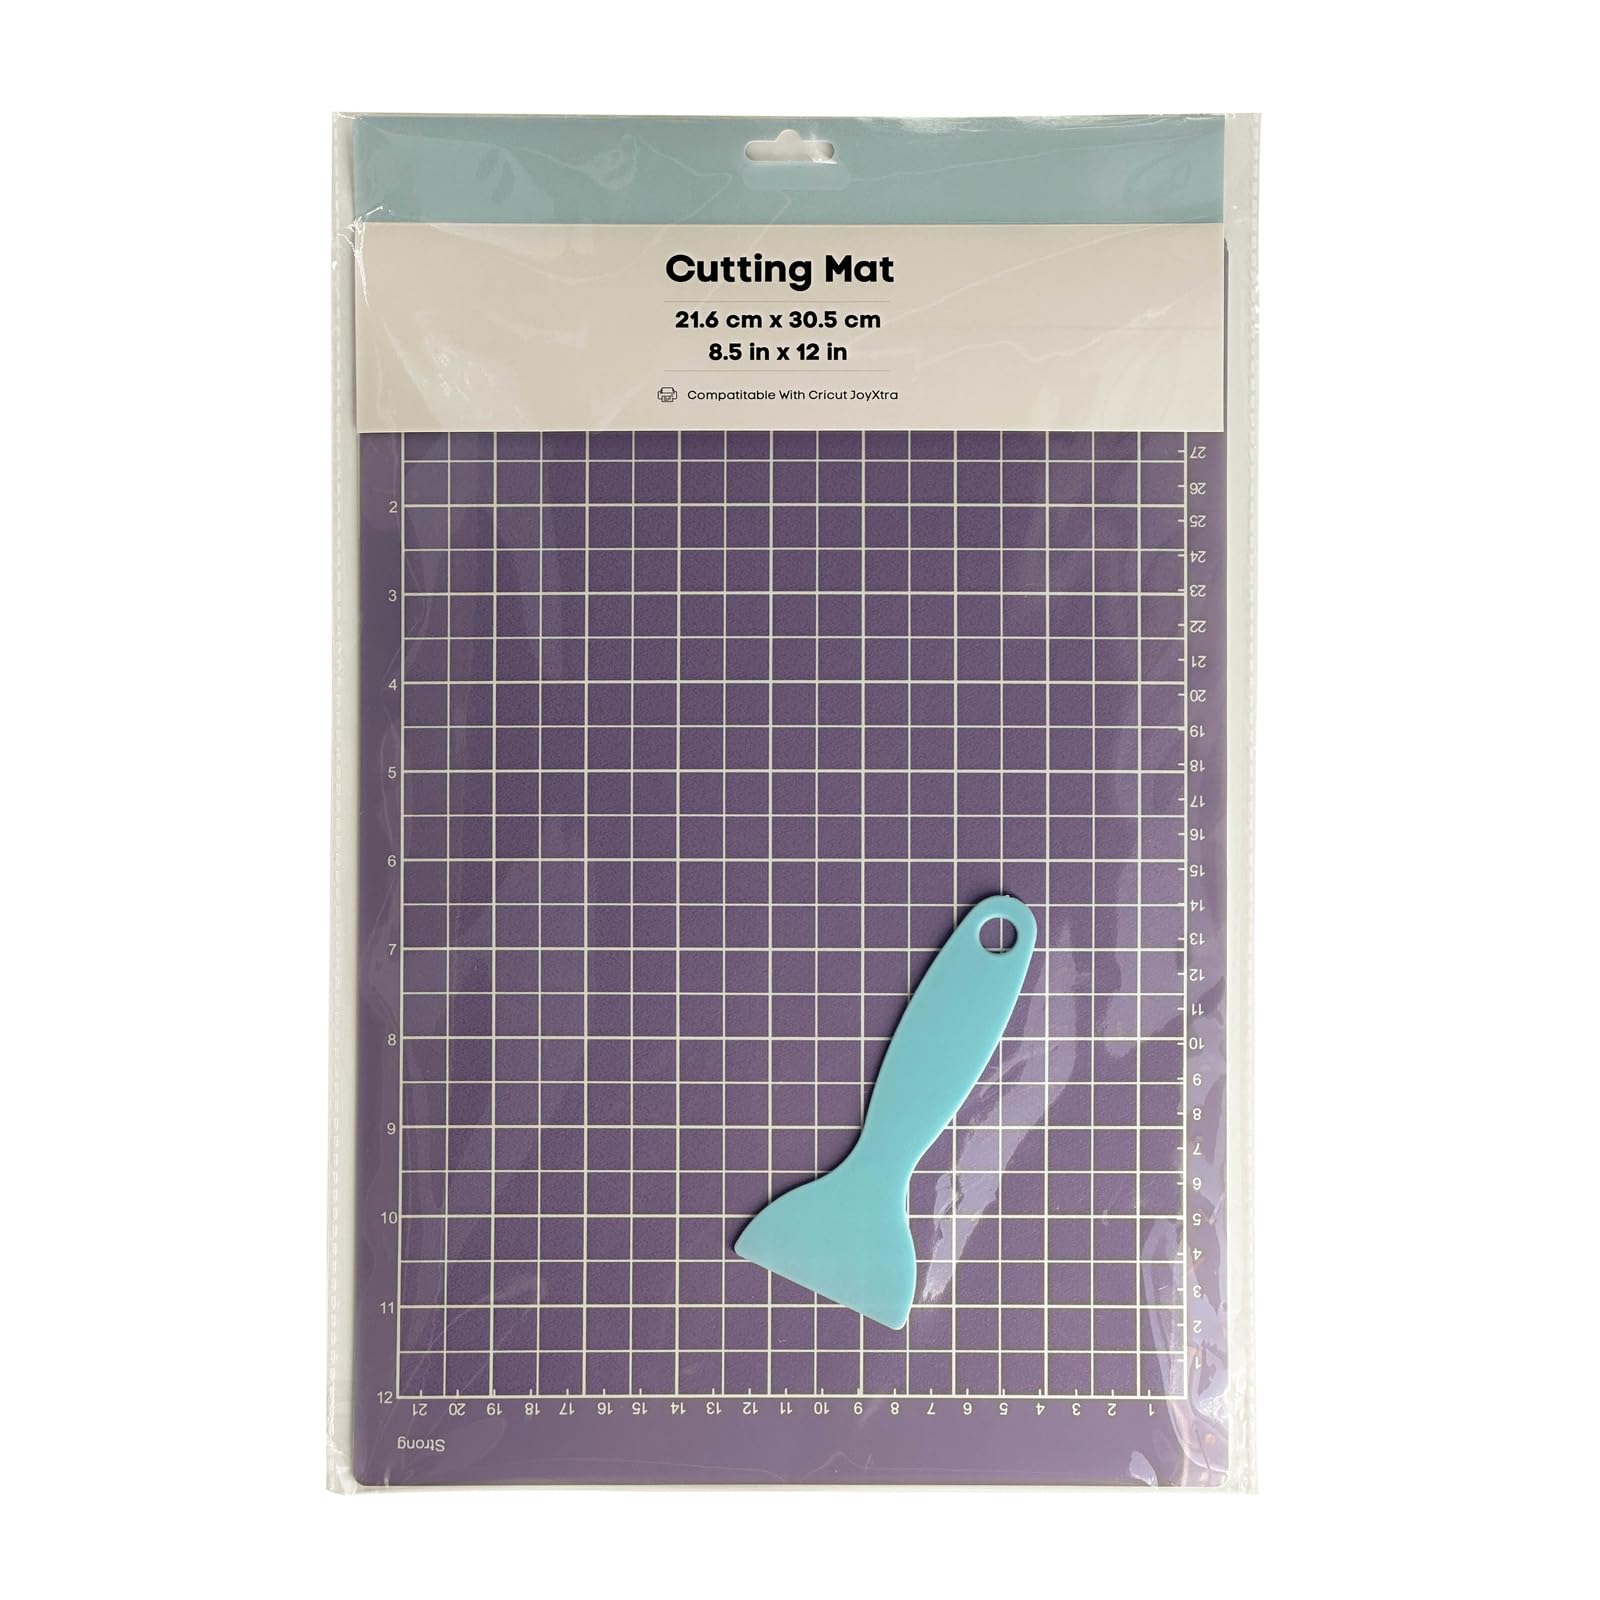  Srunffe Cutting Mat for Cricut Joy Xtra, 12 x 8.5, Adhesive  Cutting Mats/Card mat Accessories for Cricut Joy Xtra (Blue for cricut joy  Xtra (2 pack), Light Grip) : Arts, Crafts